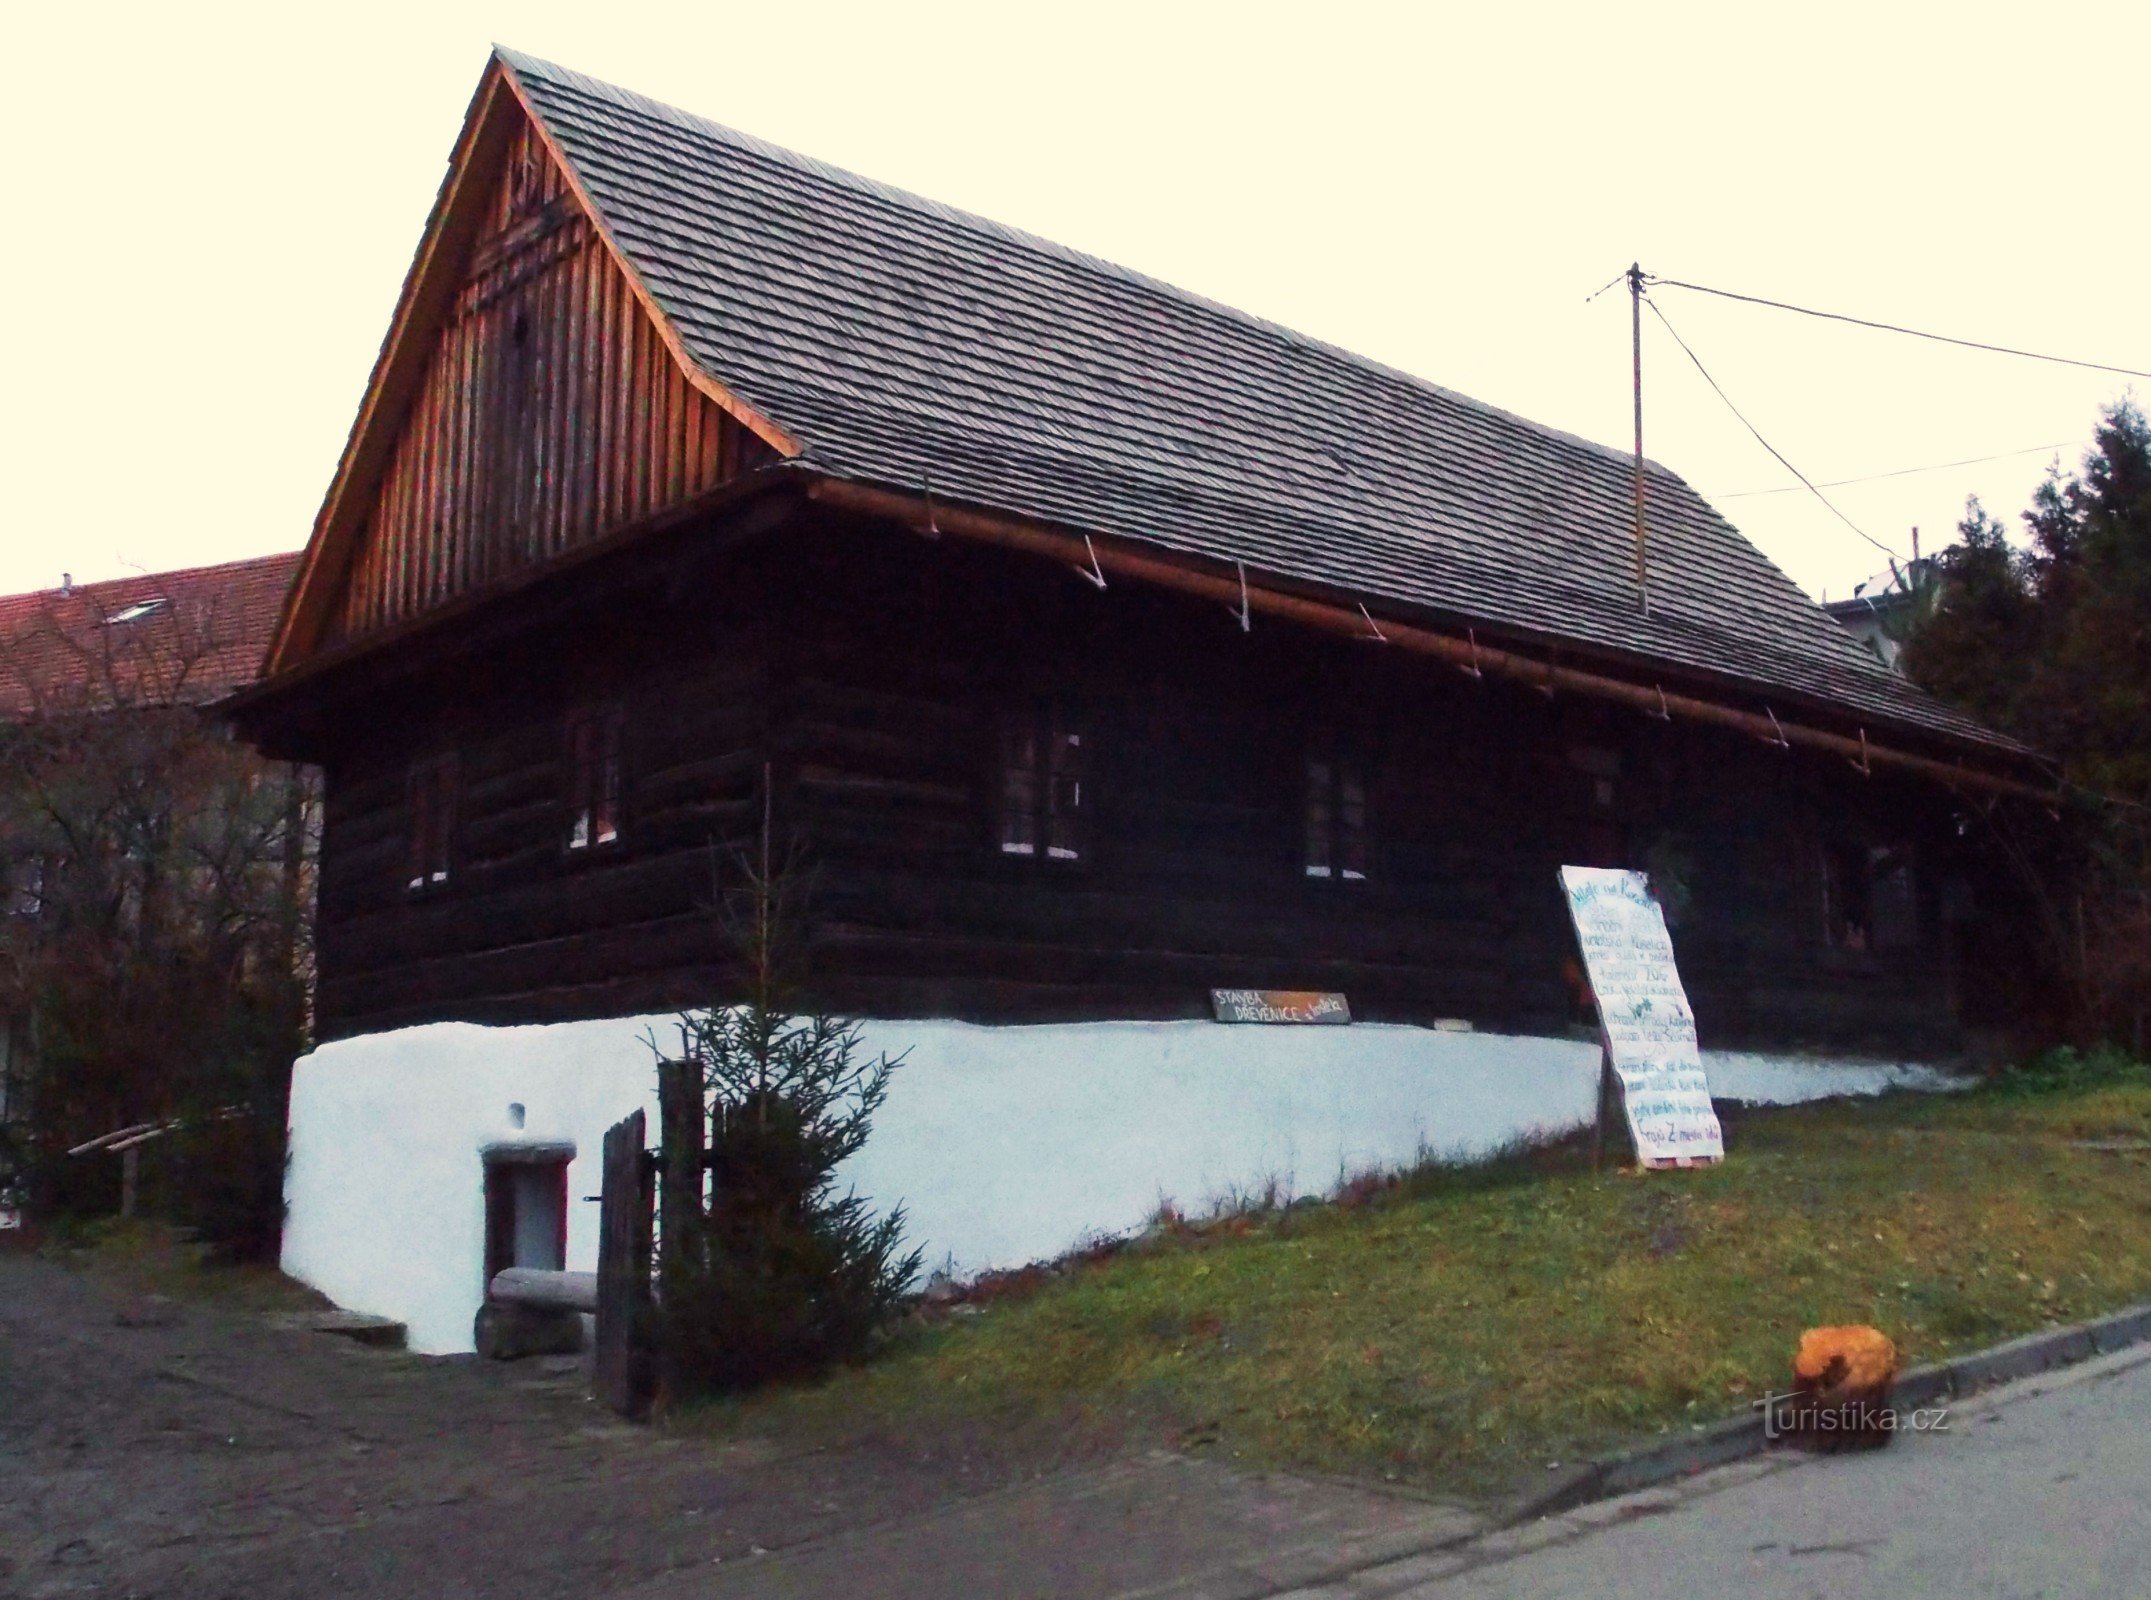 Walachische Holzhäuser in Valašské Klobouky